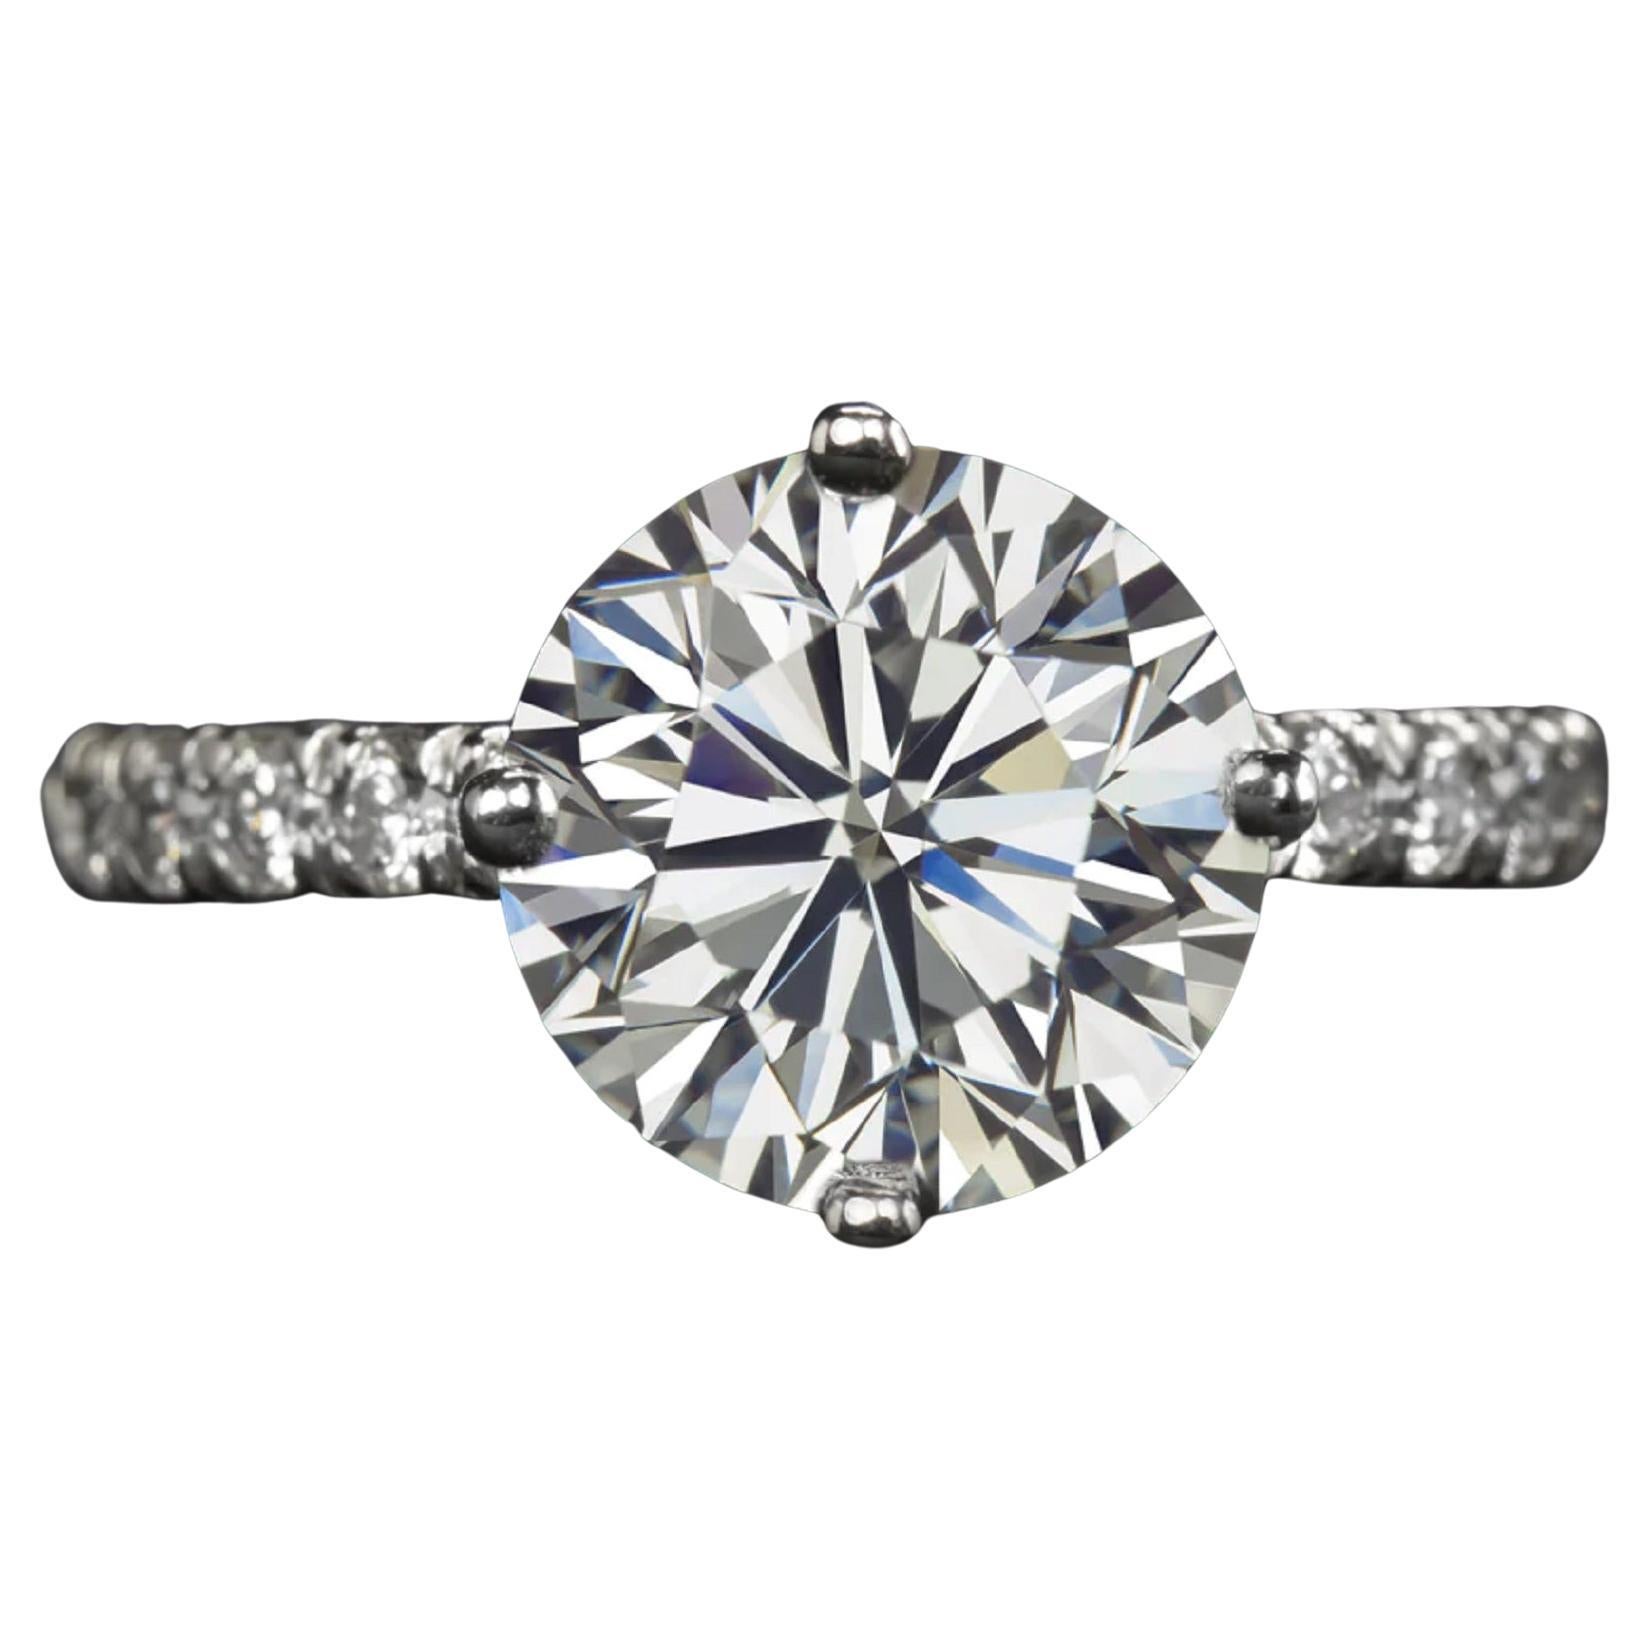 GIA Certified 3 Carat Round Cut Diamond Platinum Ring